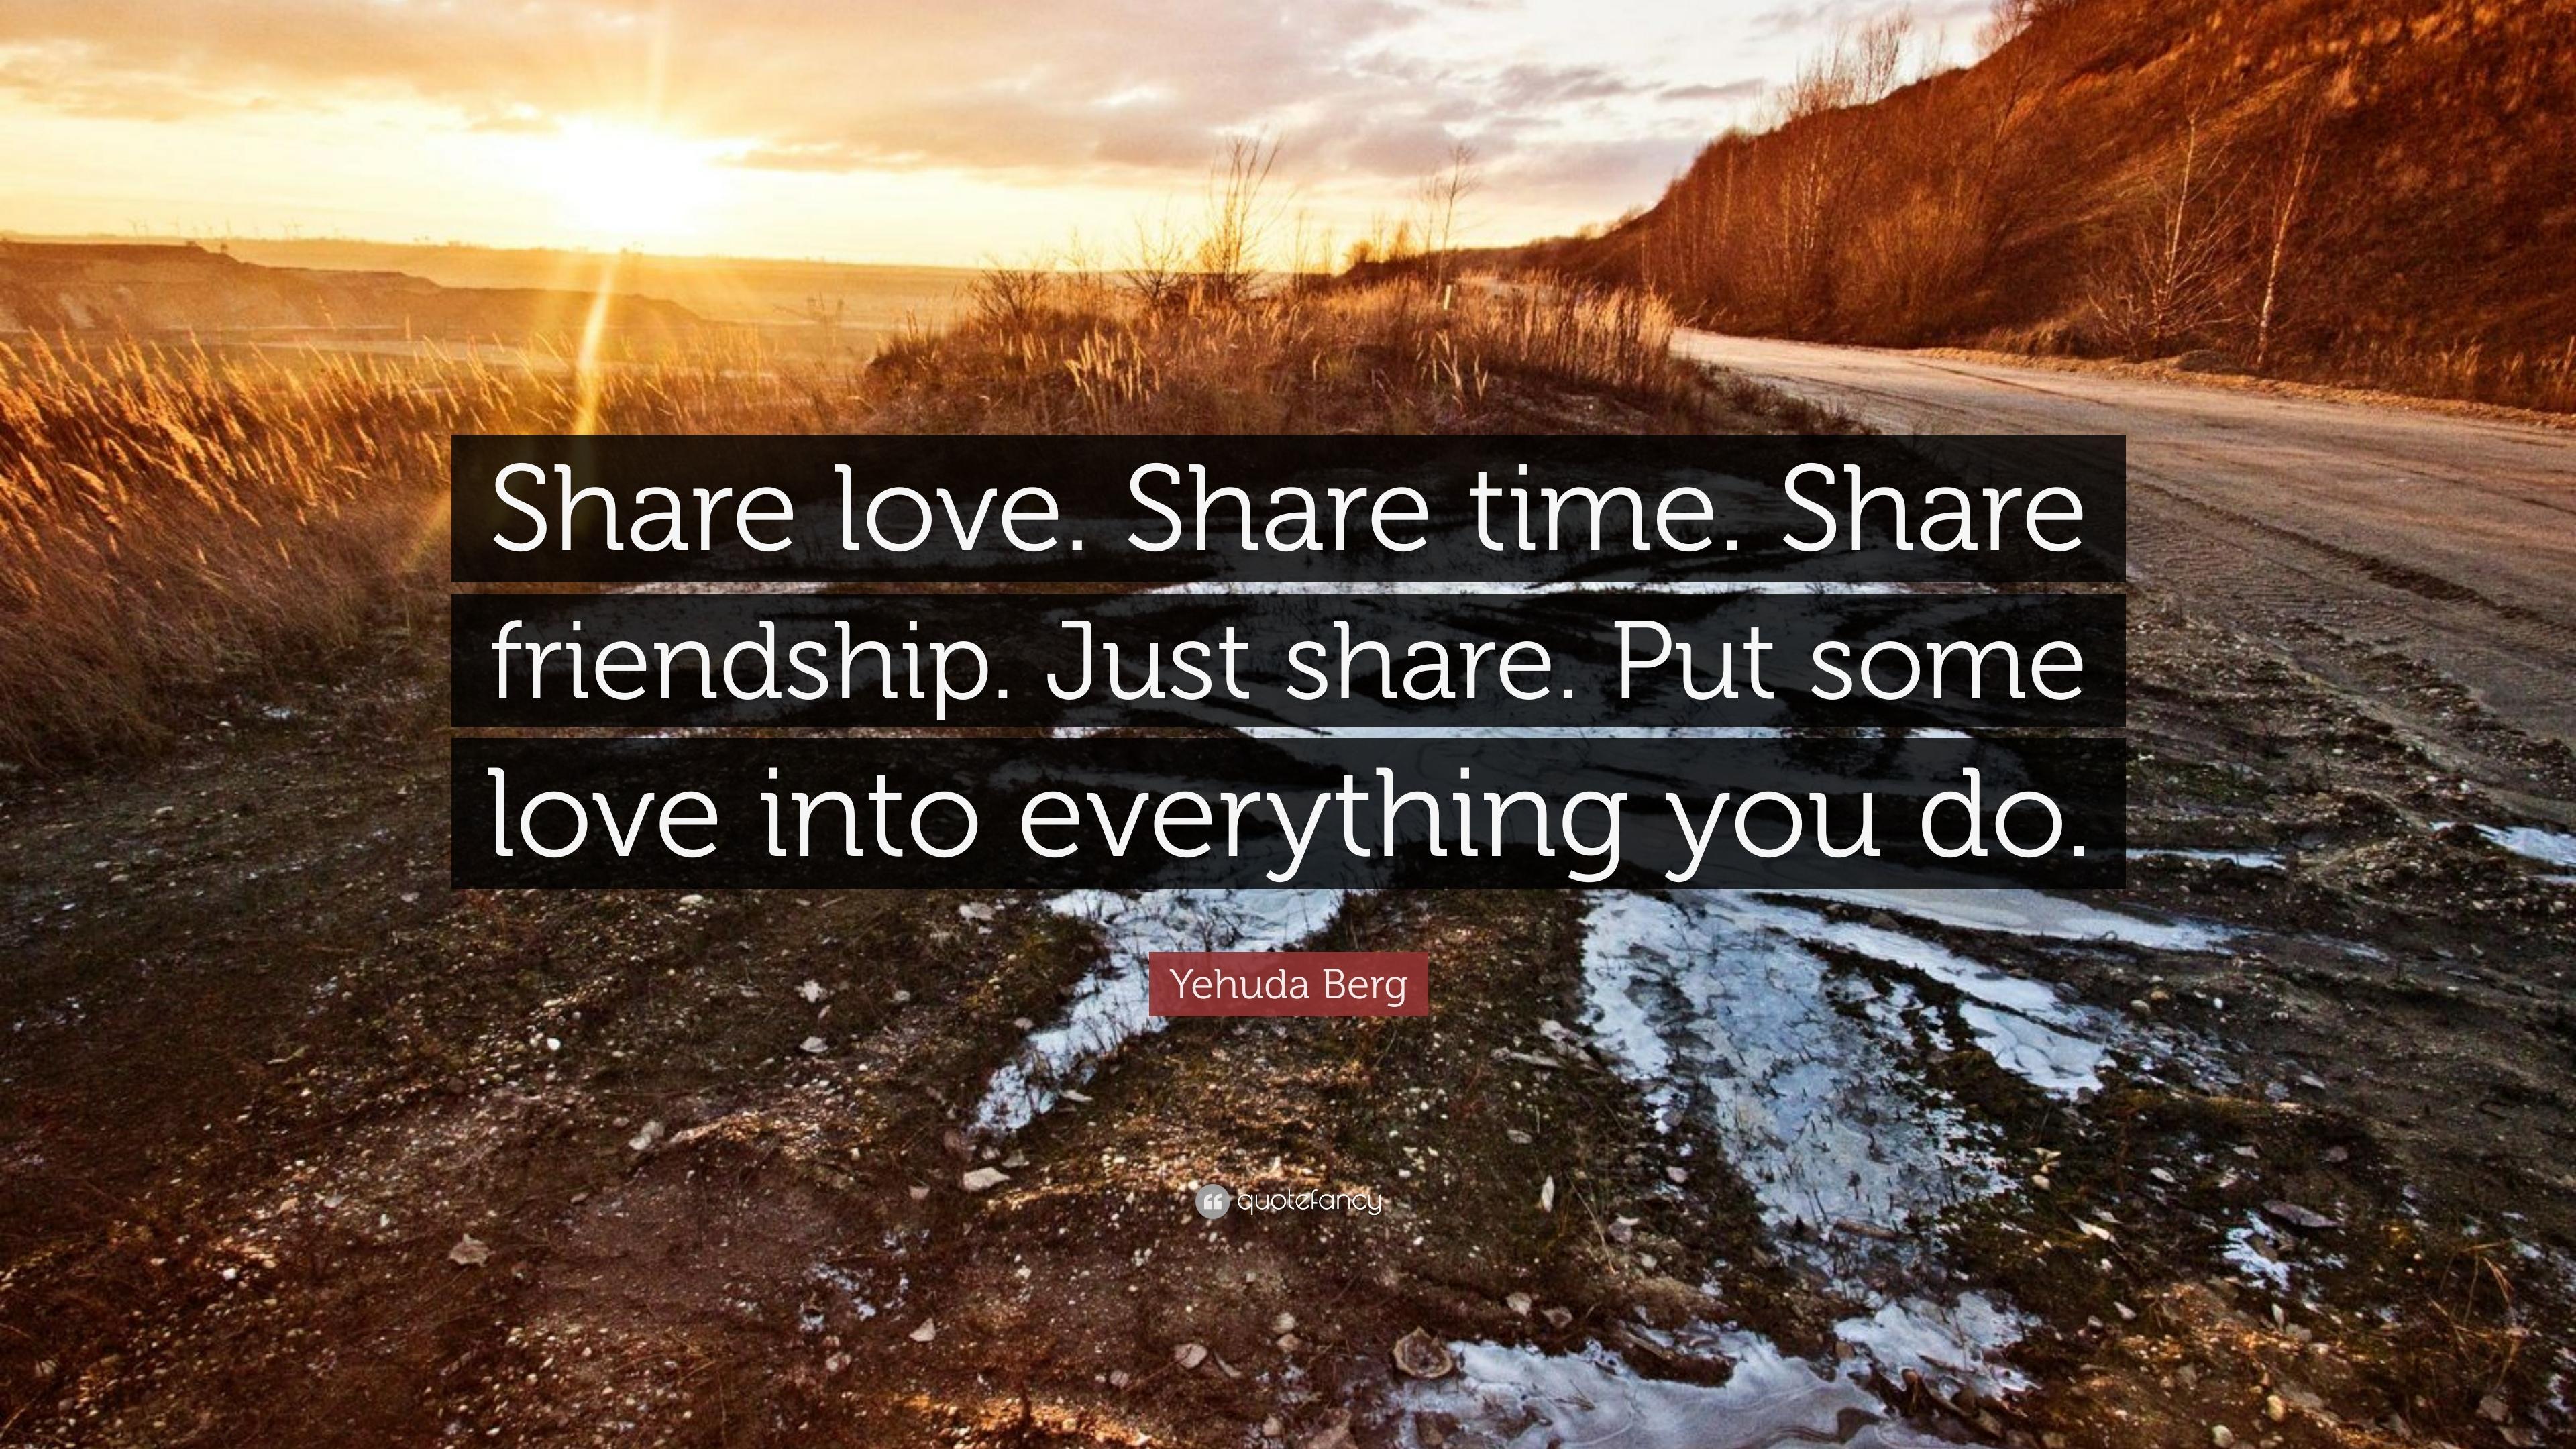 Yehuda Berg Quote: “Share love. Share time. Share friendship